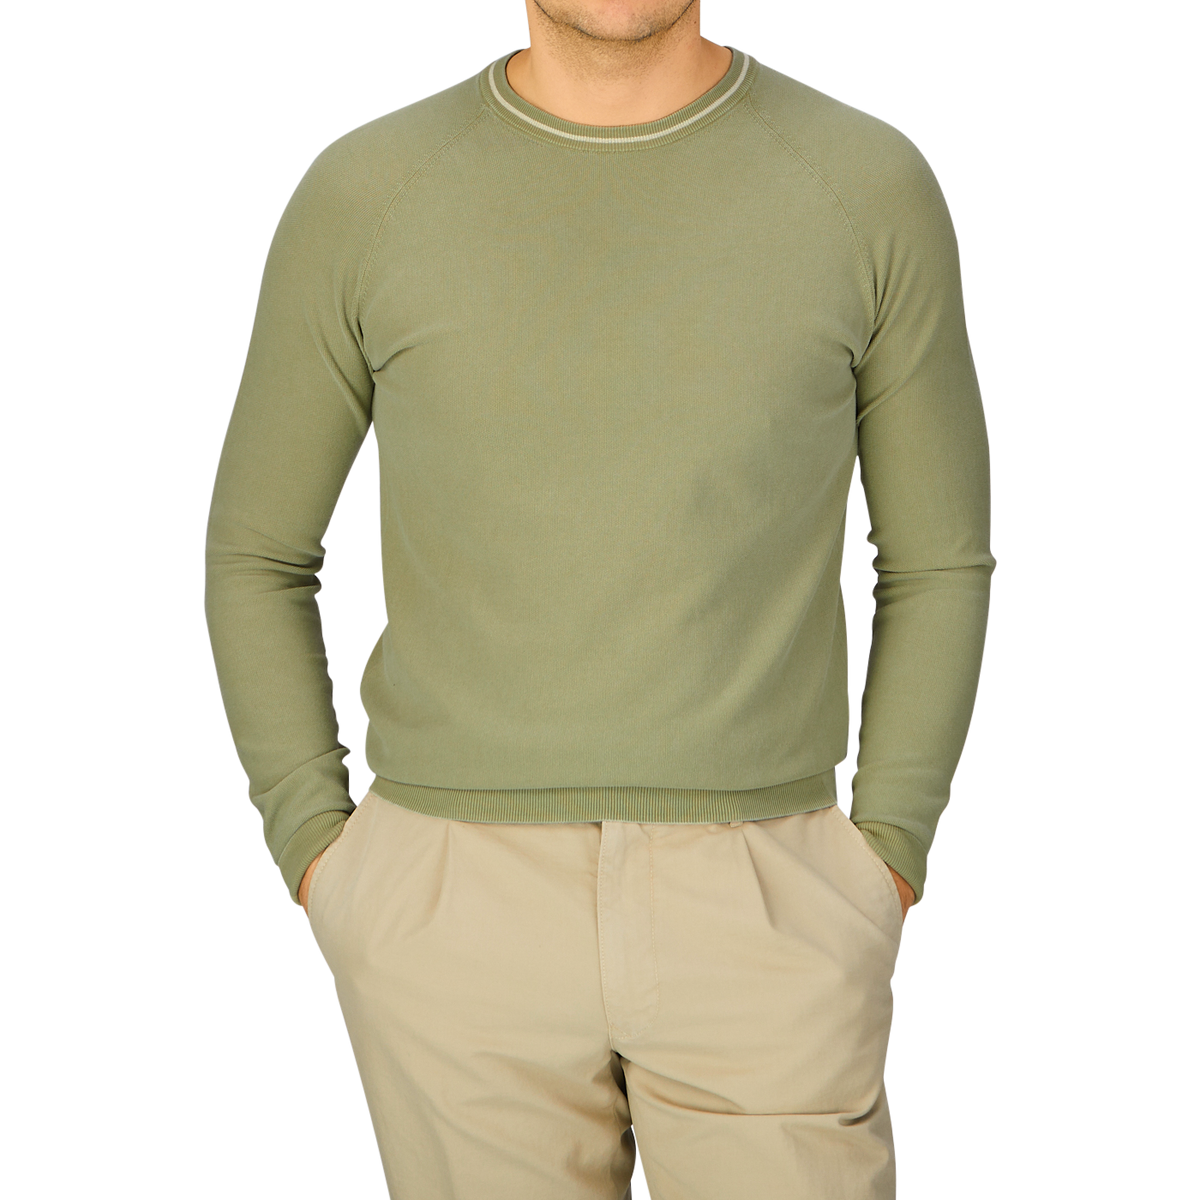 A man wearing an Aspesi Sage Green Cotton Piquet Crew Neck Sweater and khaki pants.